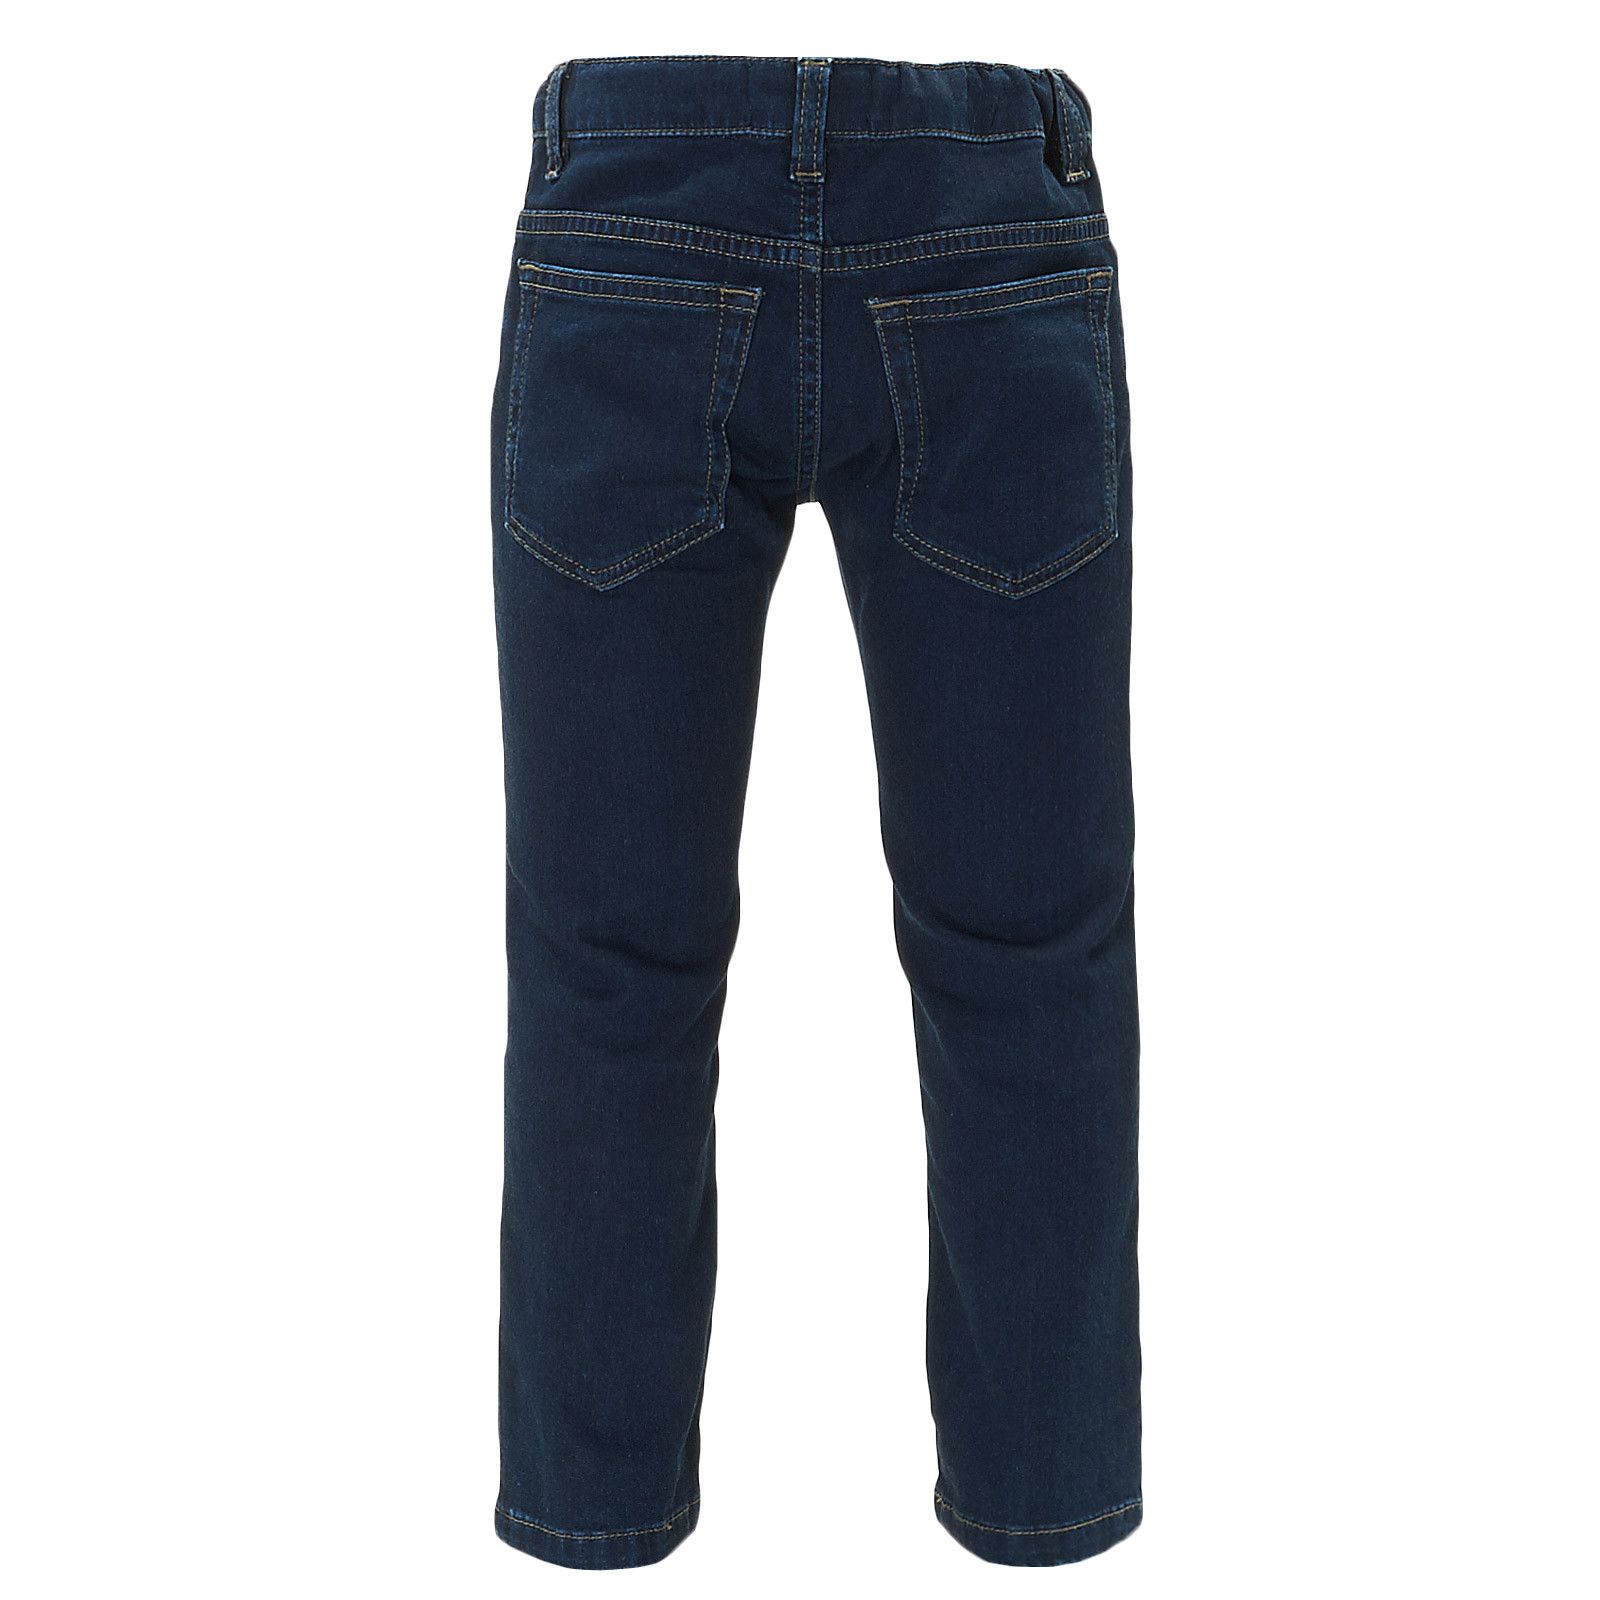 Boys Navy Blue Cotton Jersey Jeans - CÉMAROSE | Children's Fashion Store - 2